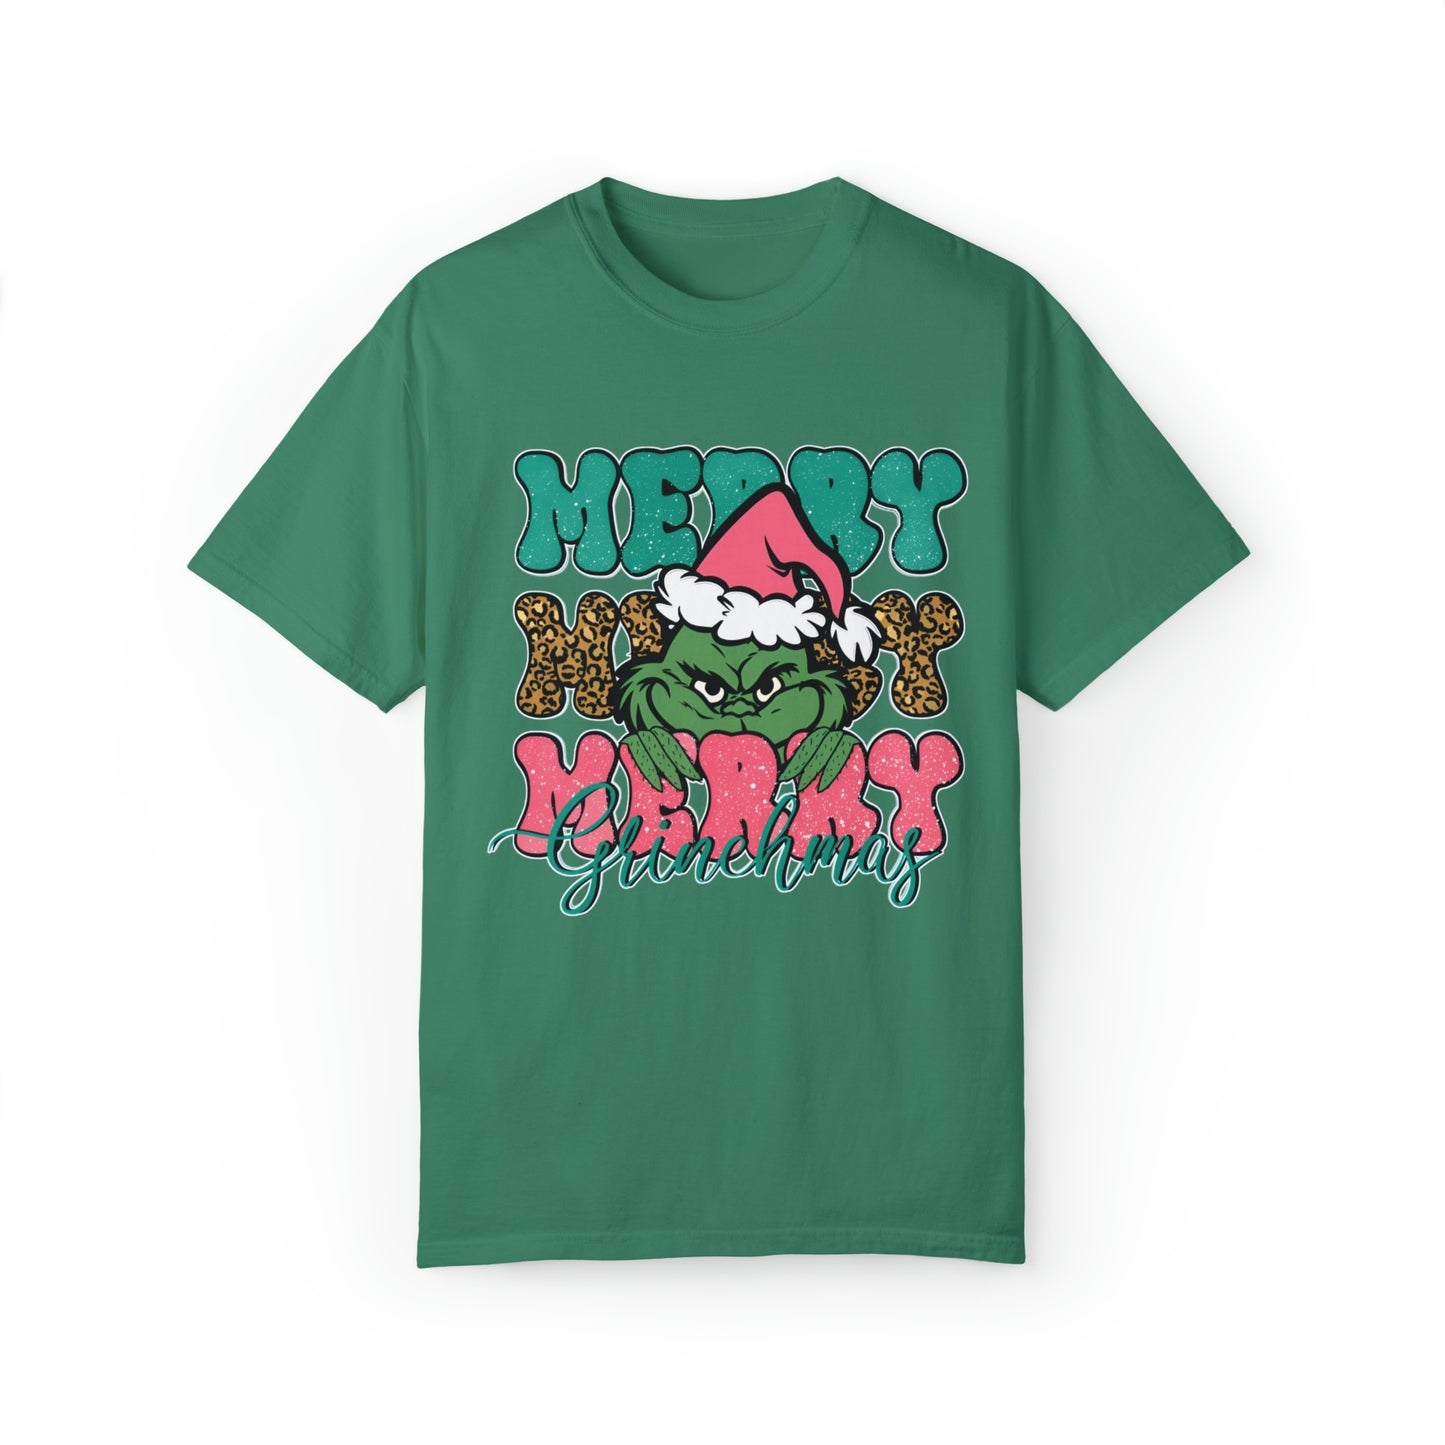 Merry Grinchmas Christmas Comfort Colors Short Sleeve Tee